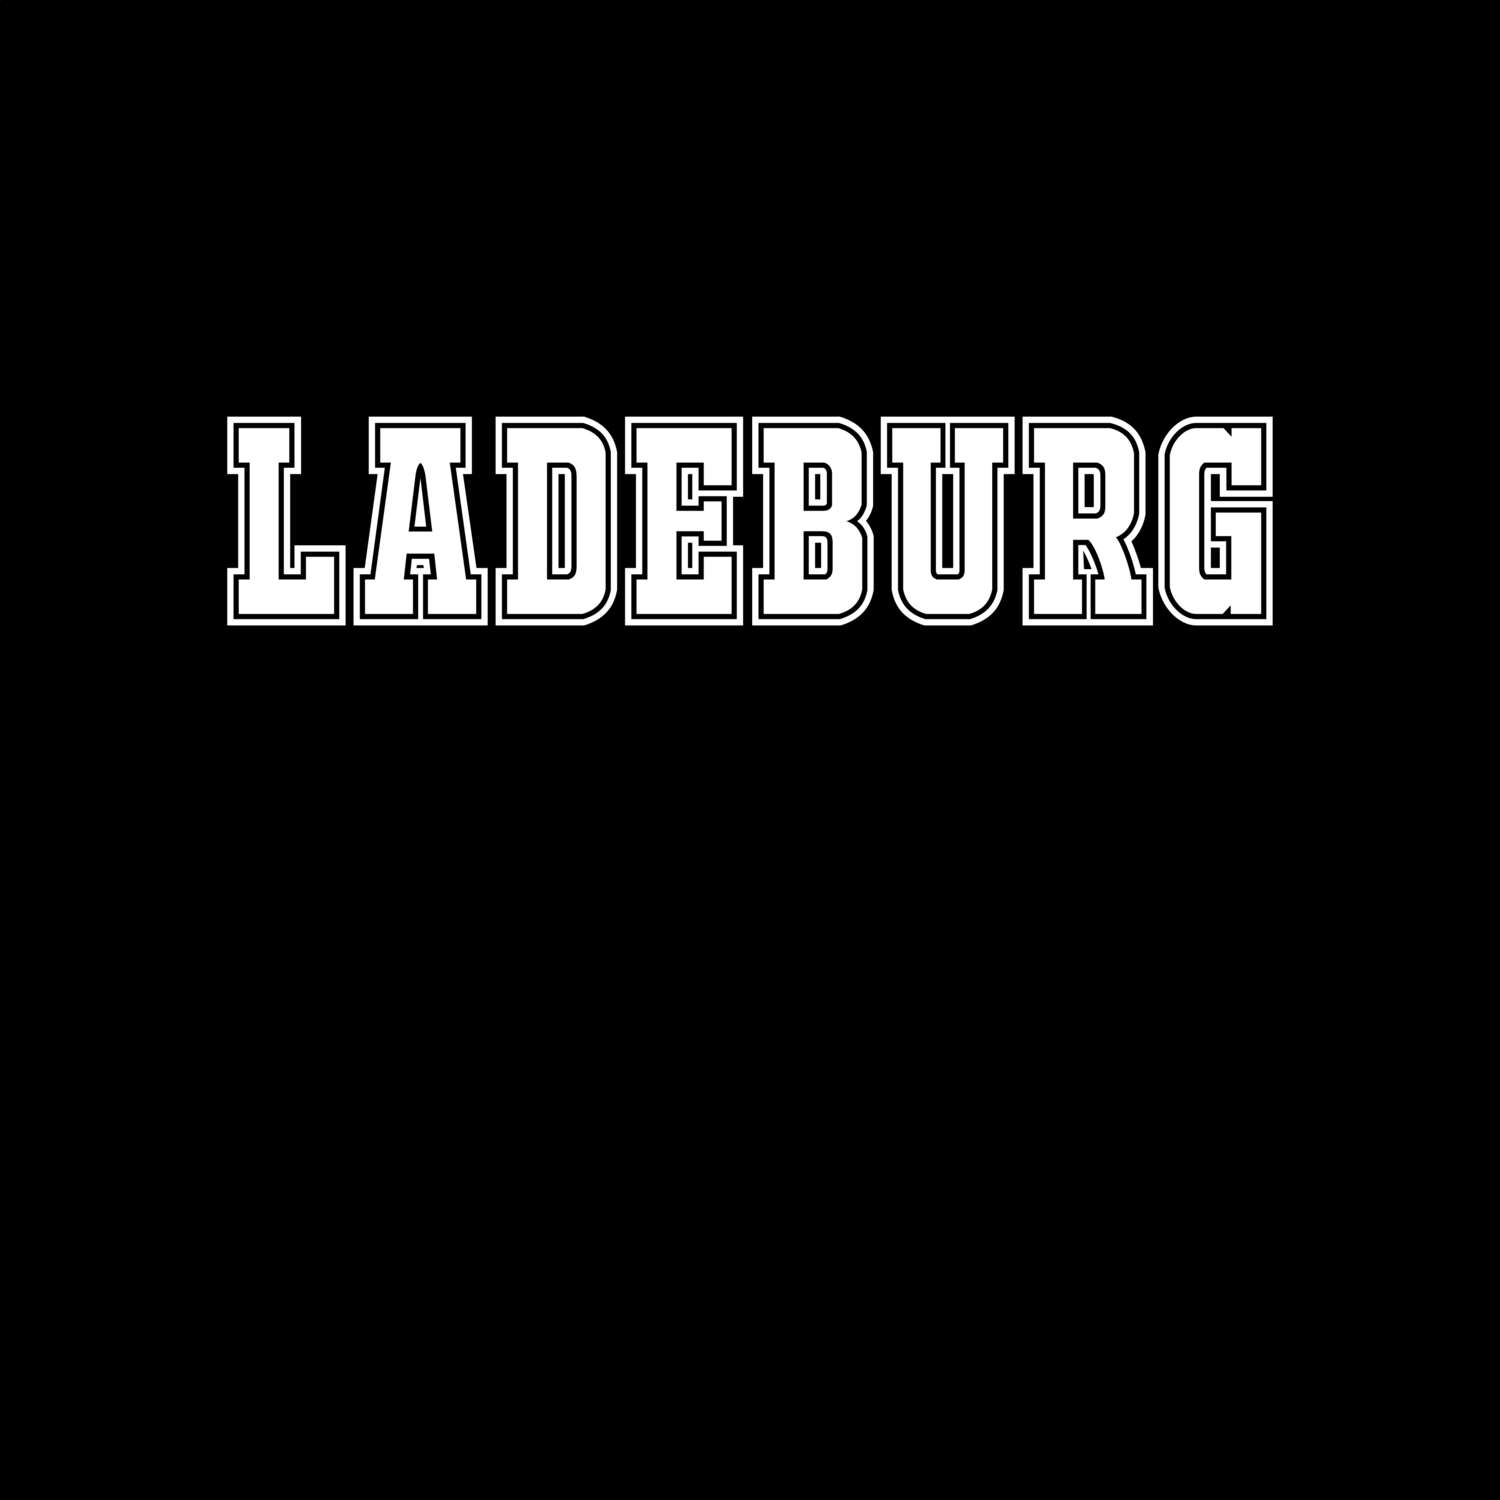 Ladeburg T-Shirt »Classic«